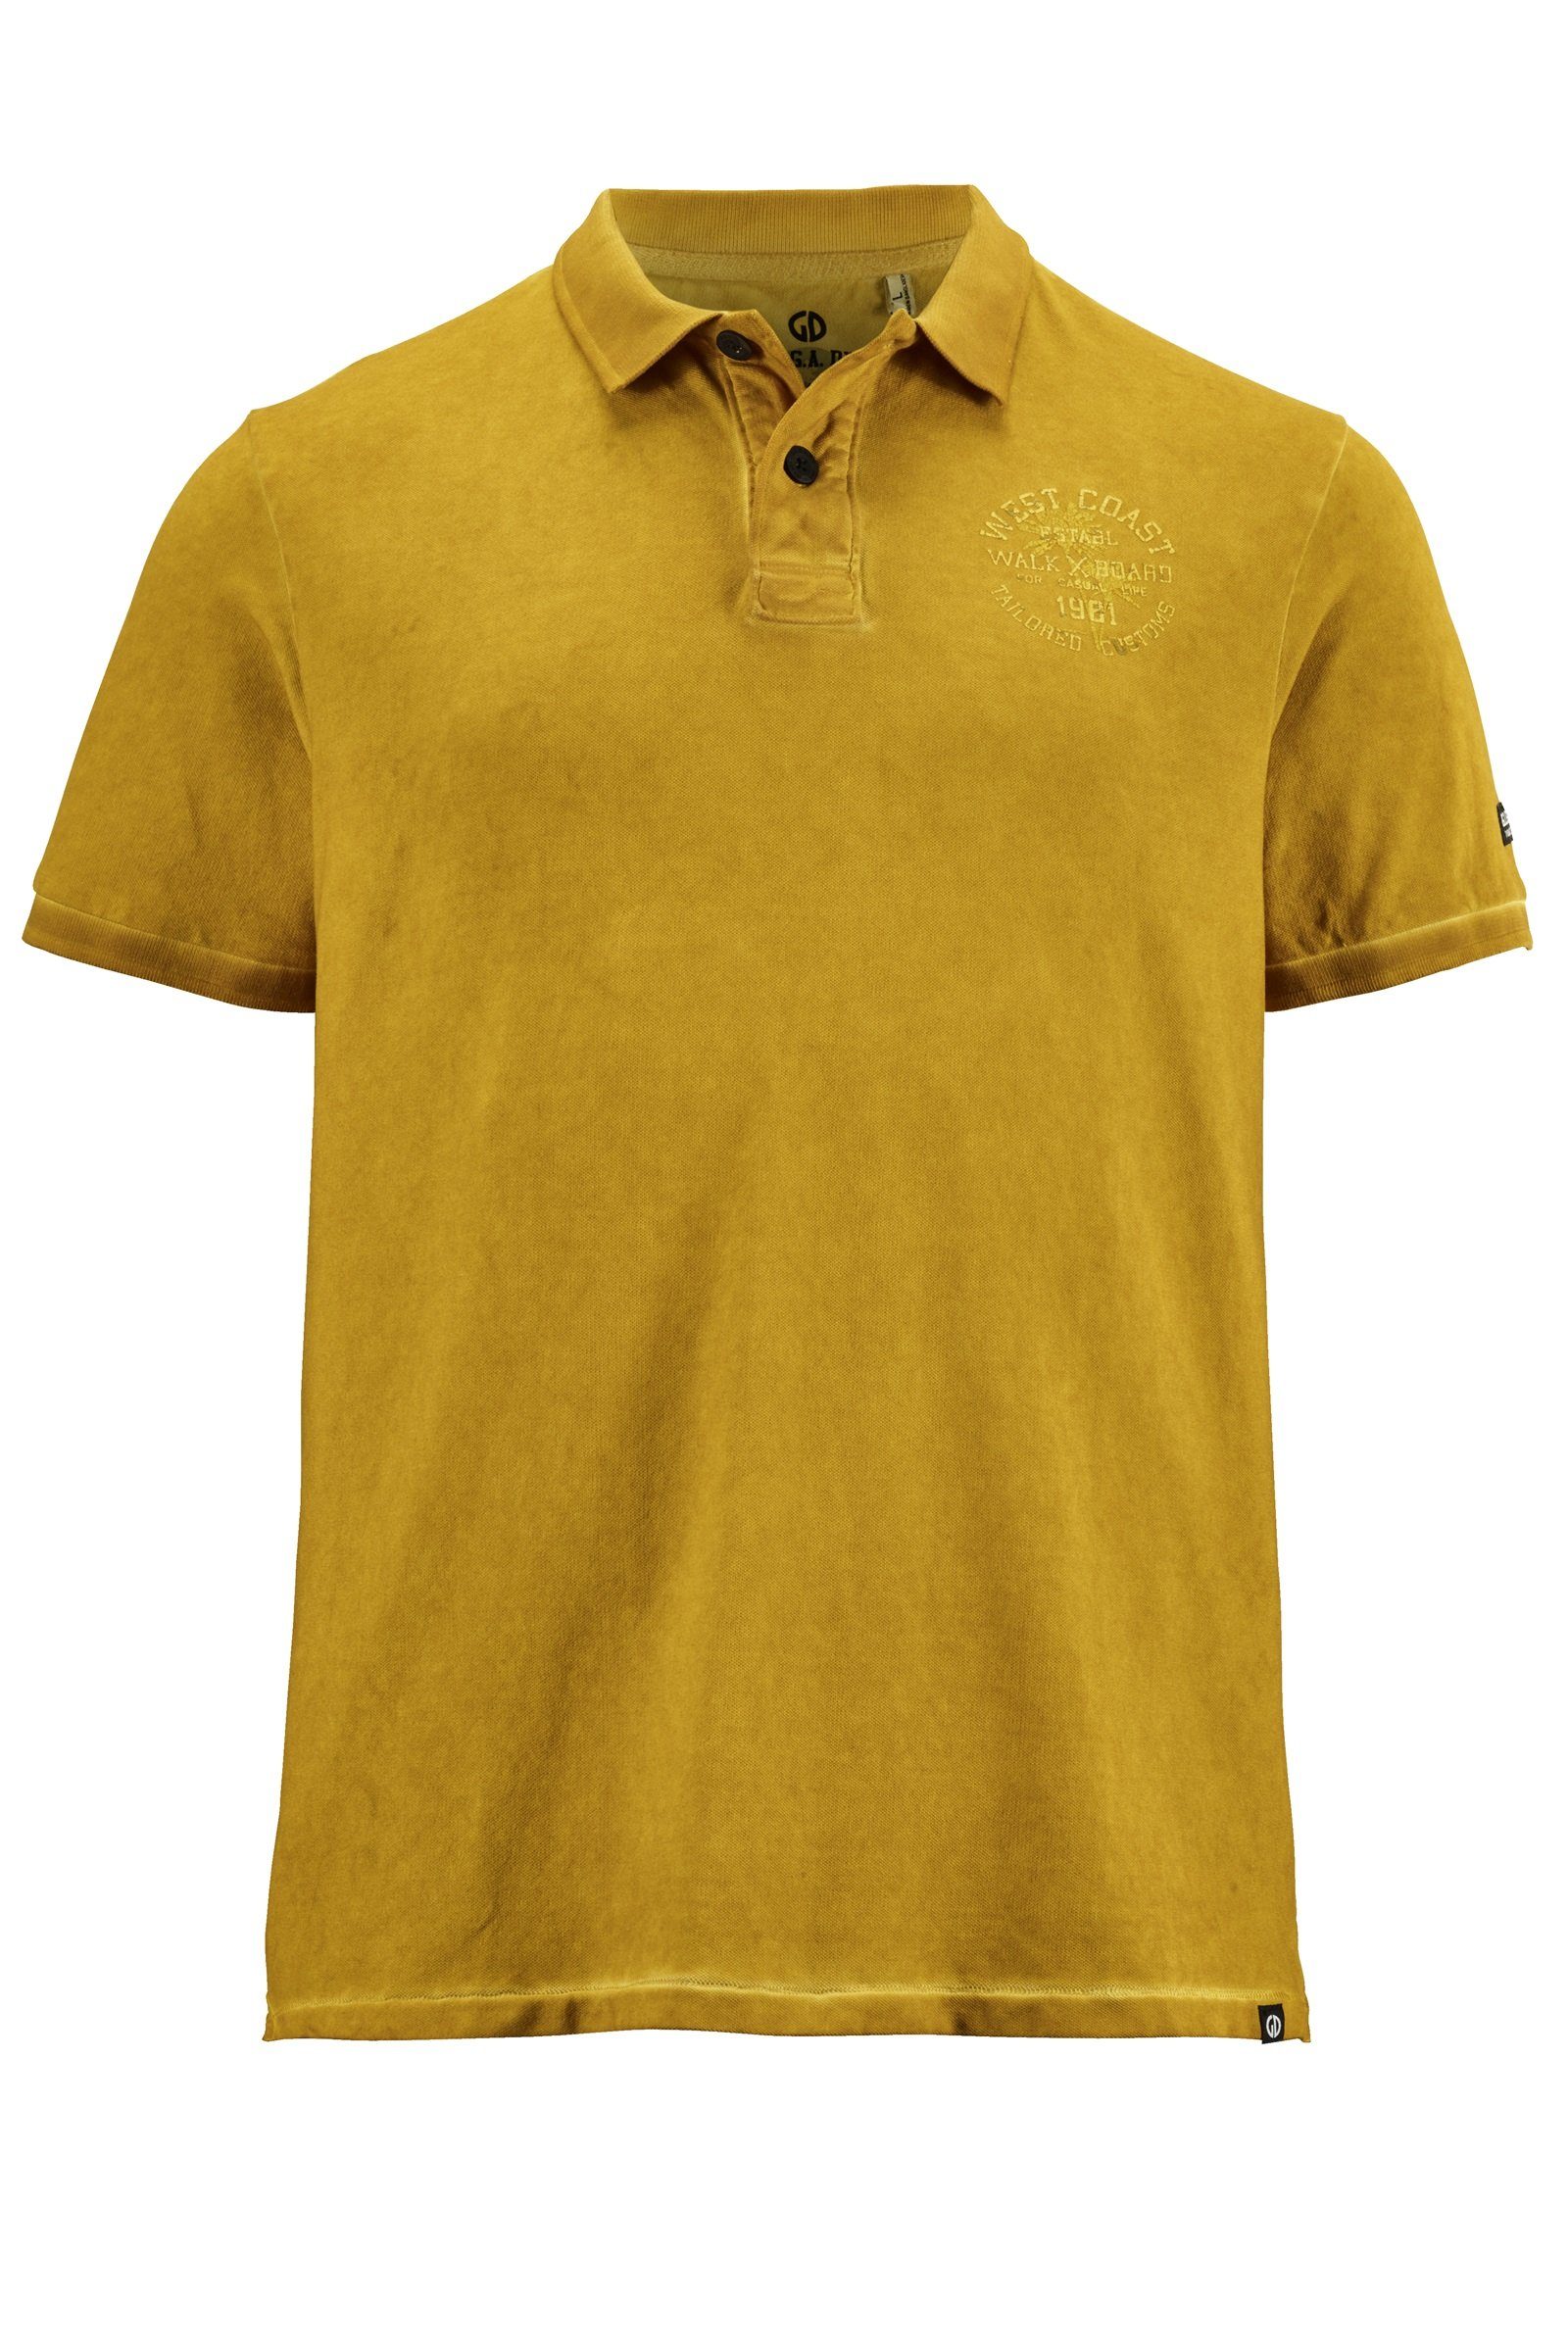 G.I.G.A. DX by killtec Poloshirt G.I.G.A. DX Herren Poloshirt Stane A Adult gebranntes gelb